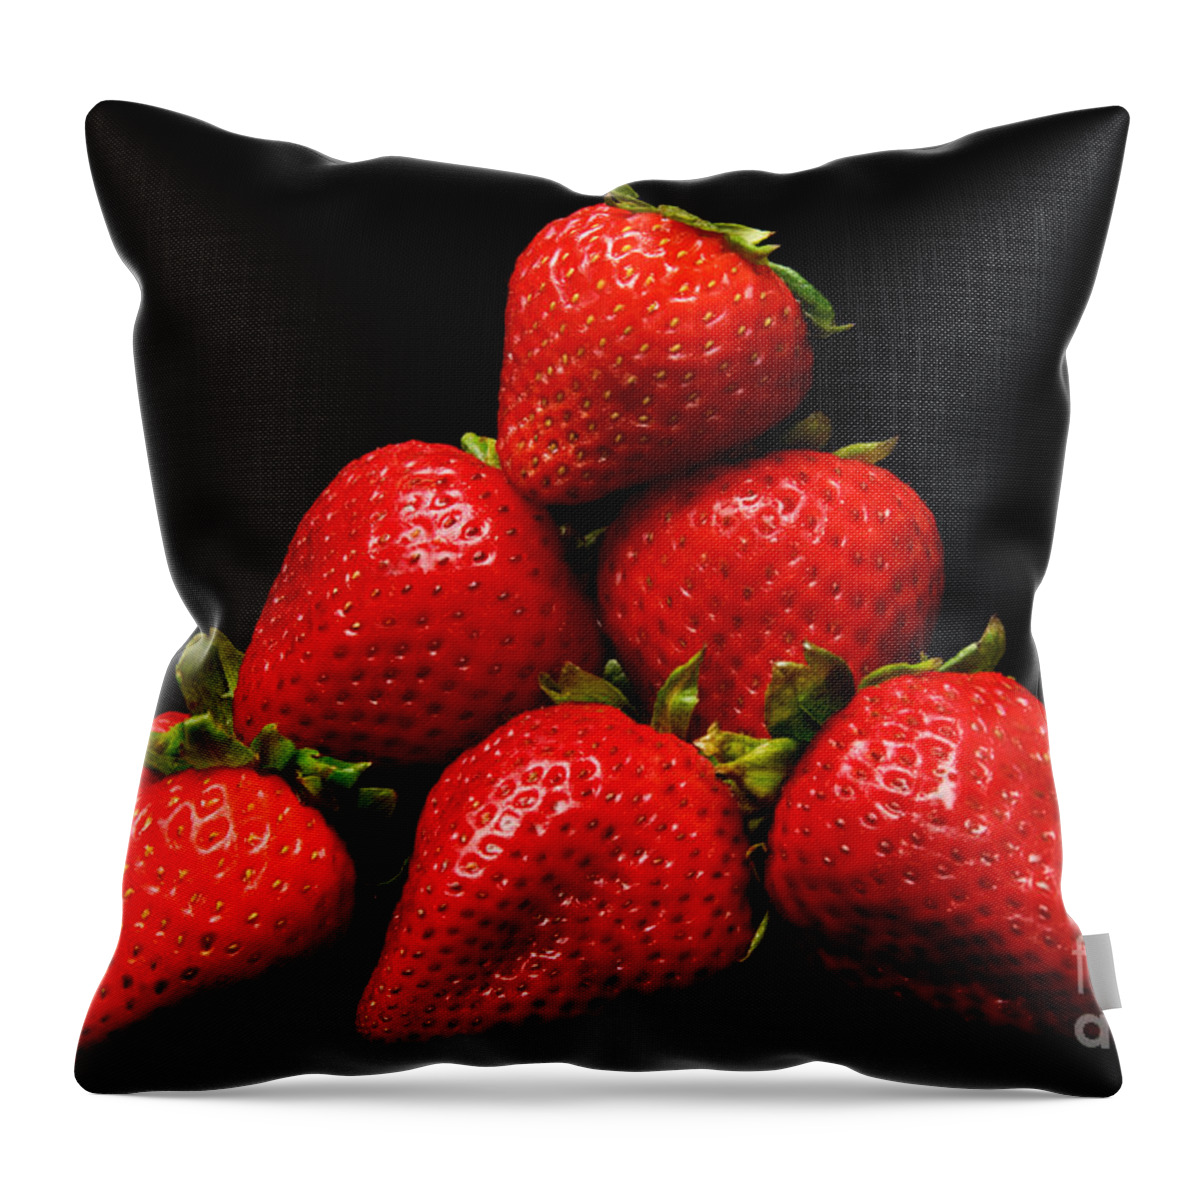 Strawberries On Velvet Throw Pillow featuring the photograph Strawberries On Velvet by Andee Design